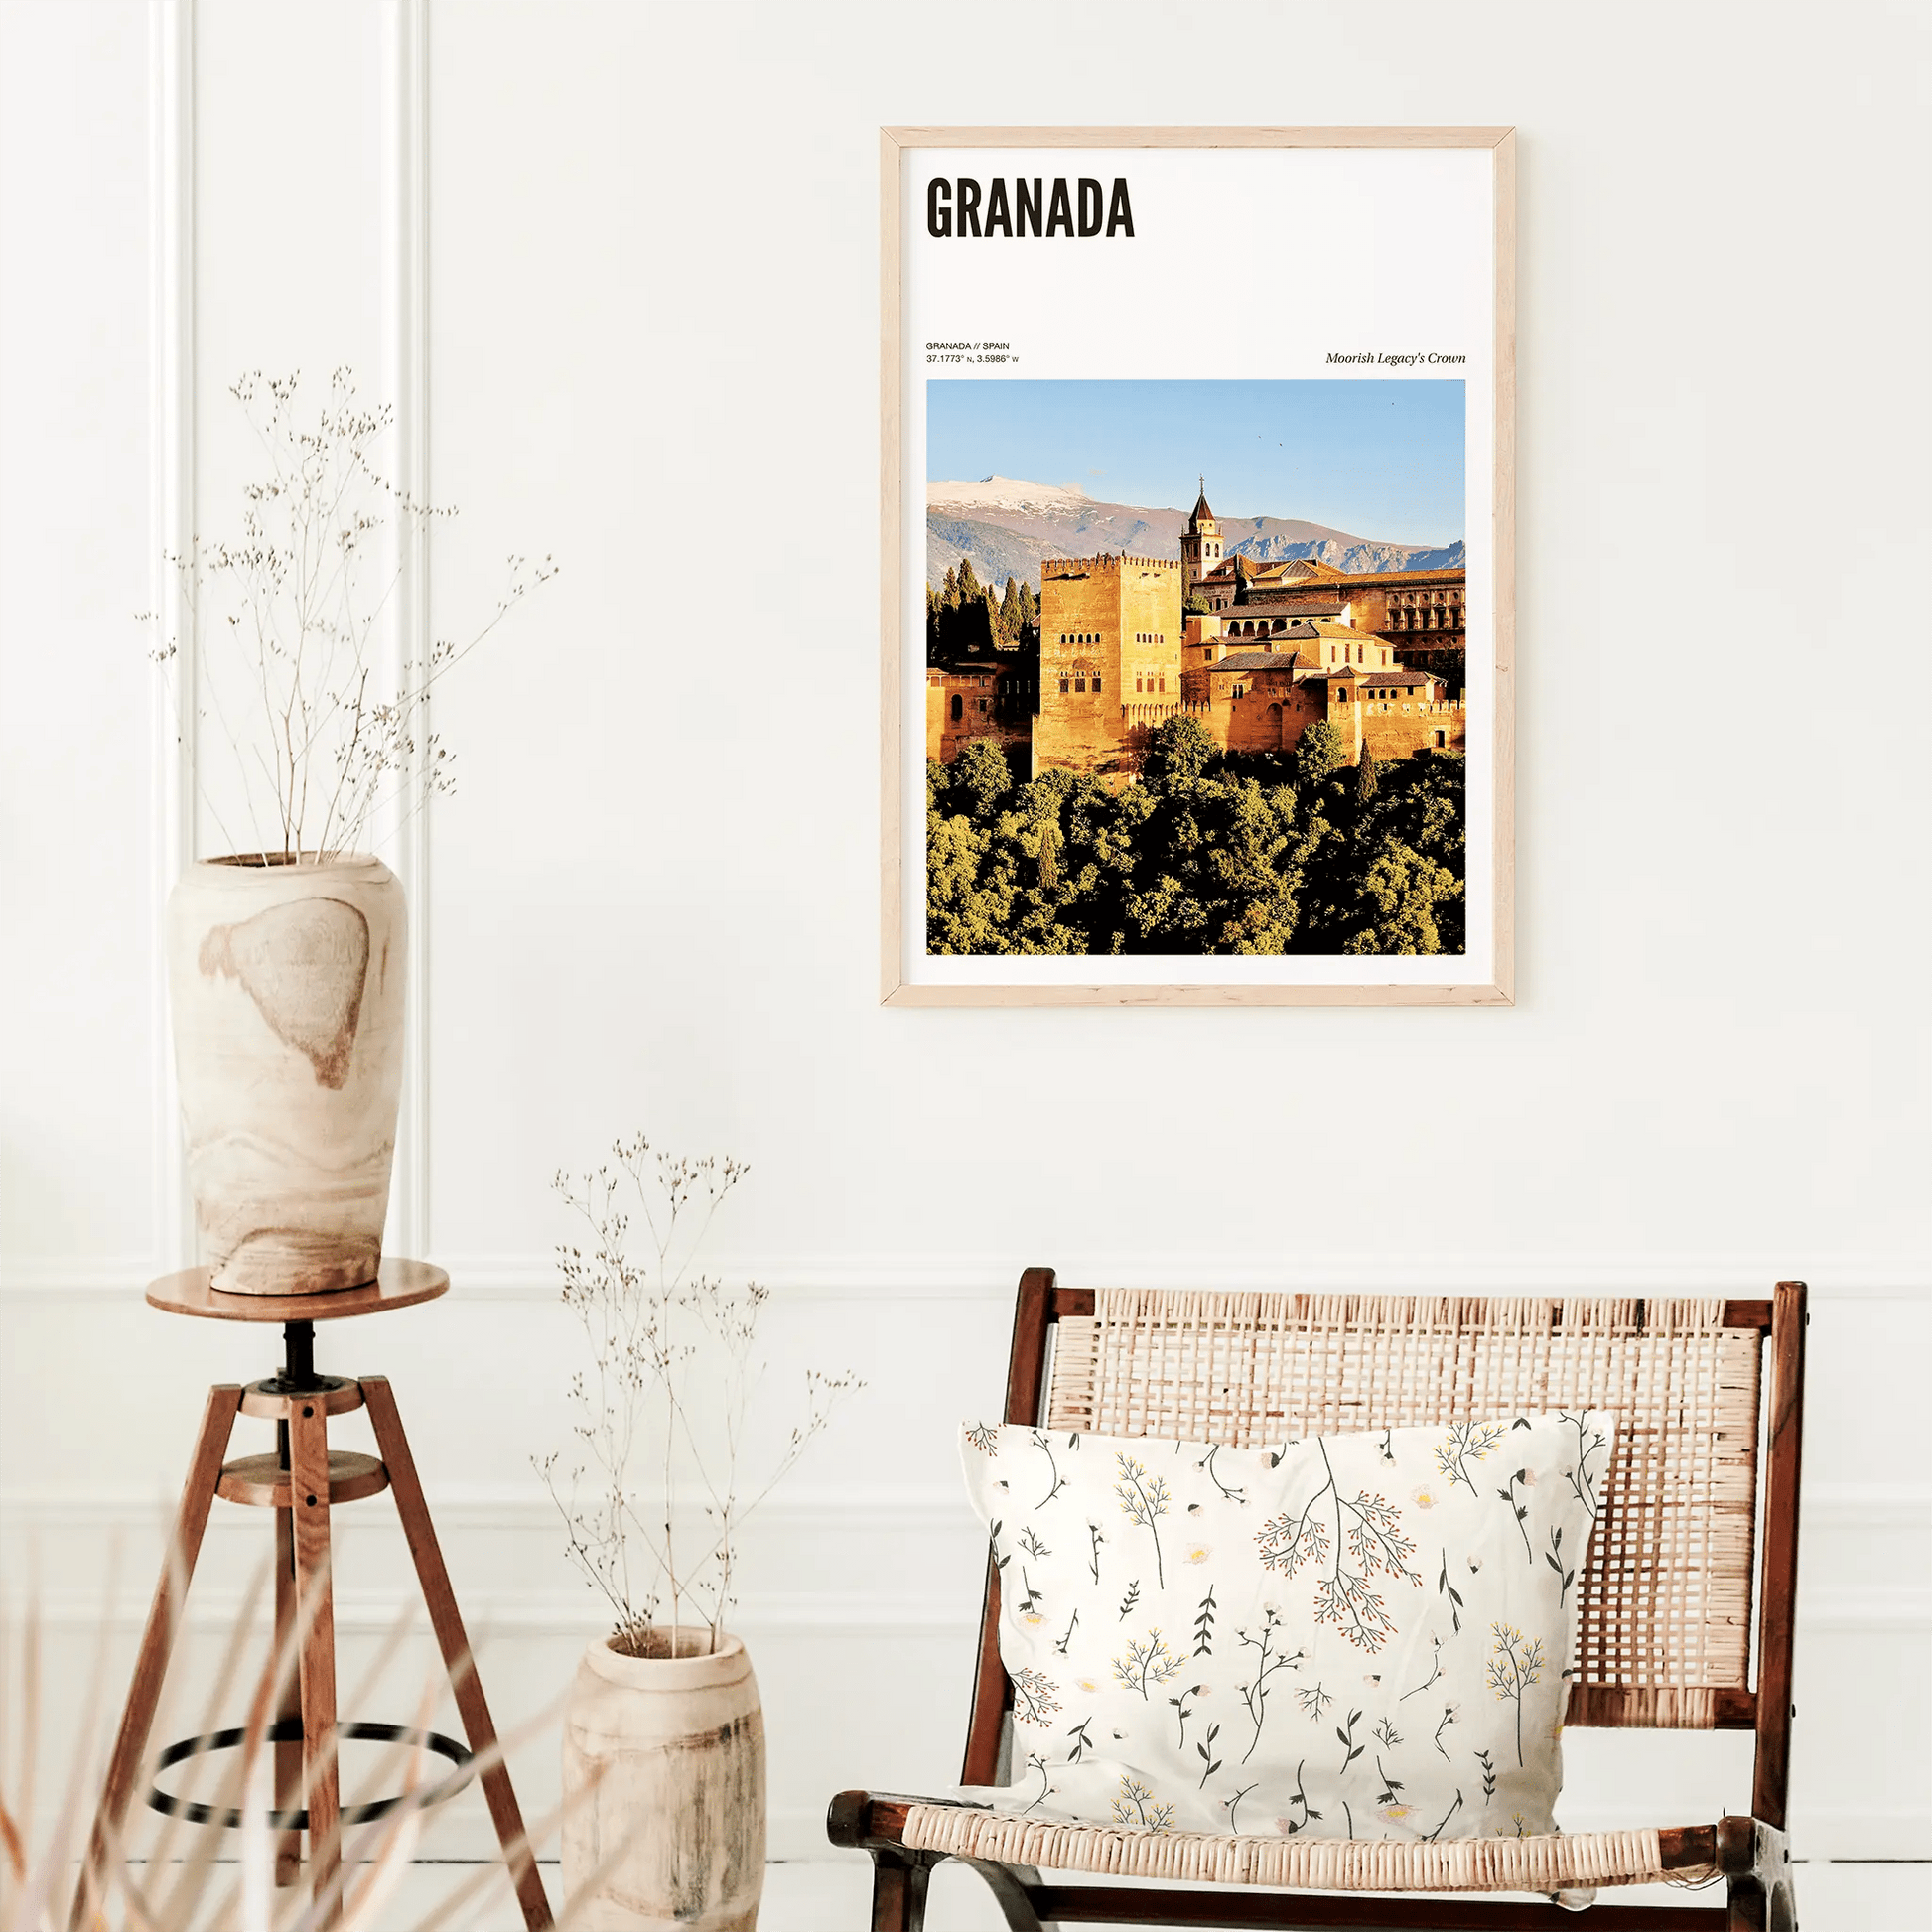 Granada Odyssey Poster - The Globe Gallery